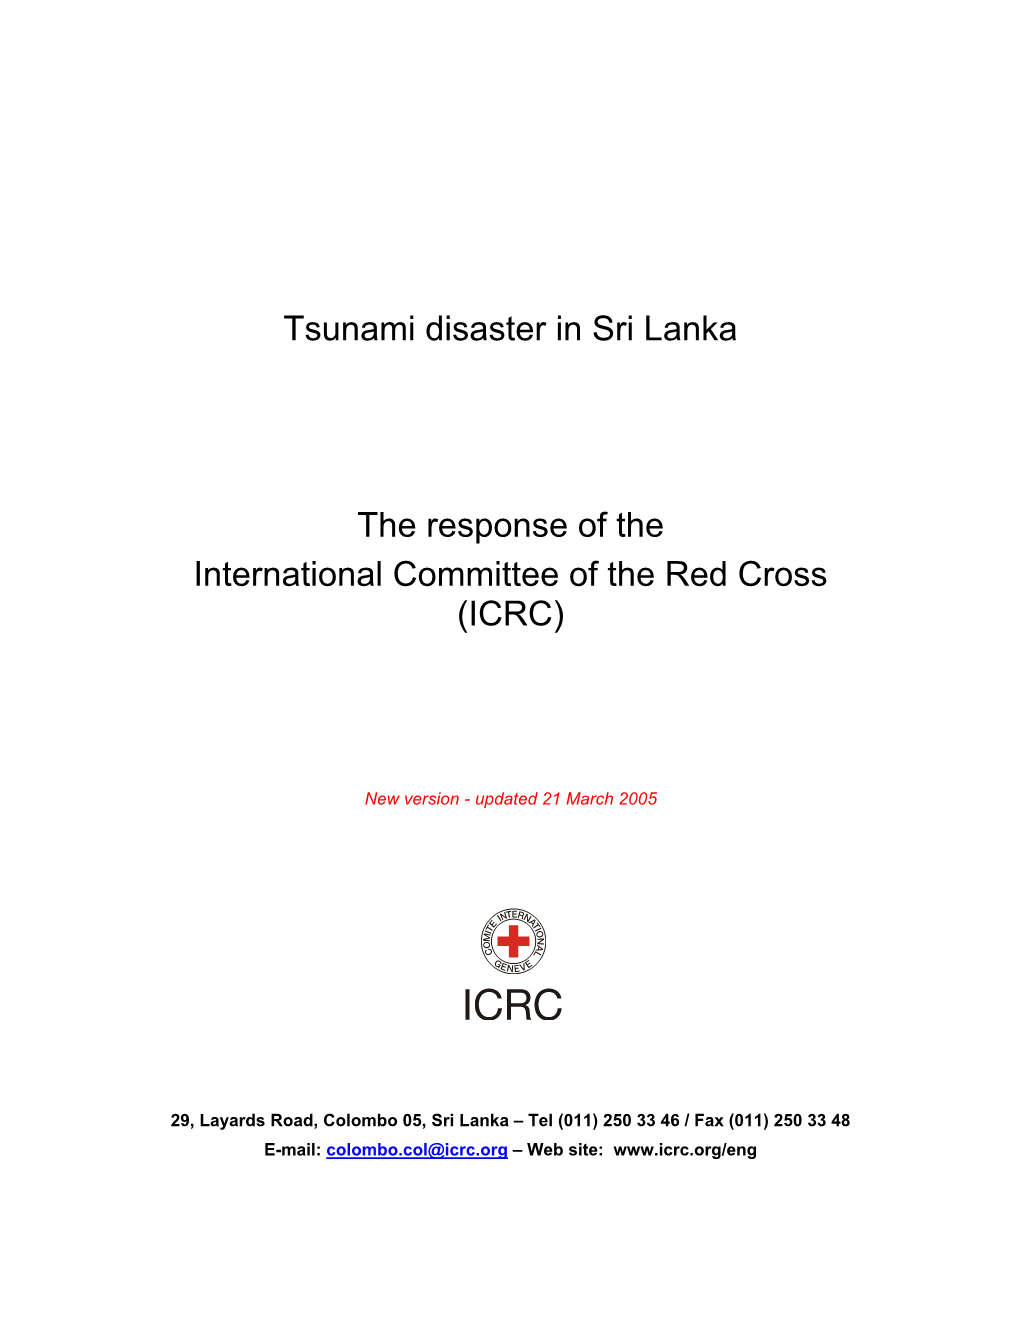 Tsunami Disaster in Sri Lanka the Response of the International